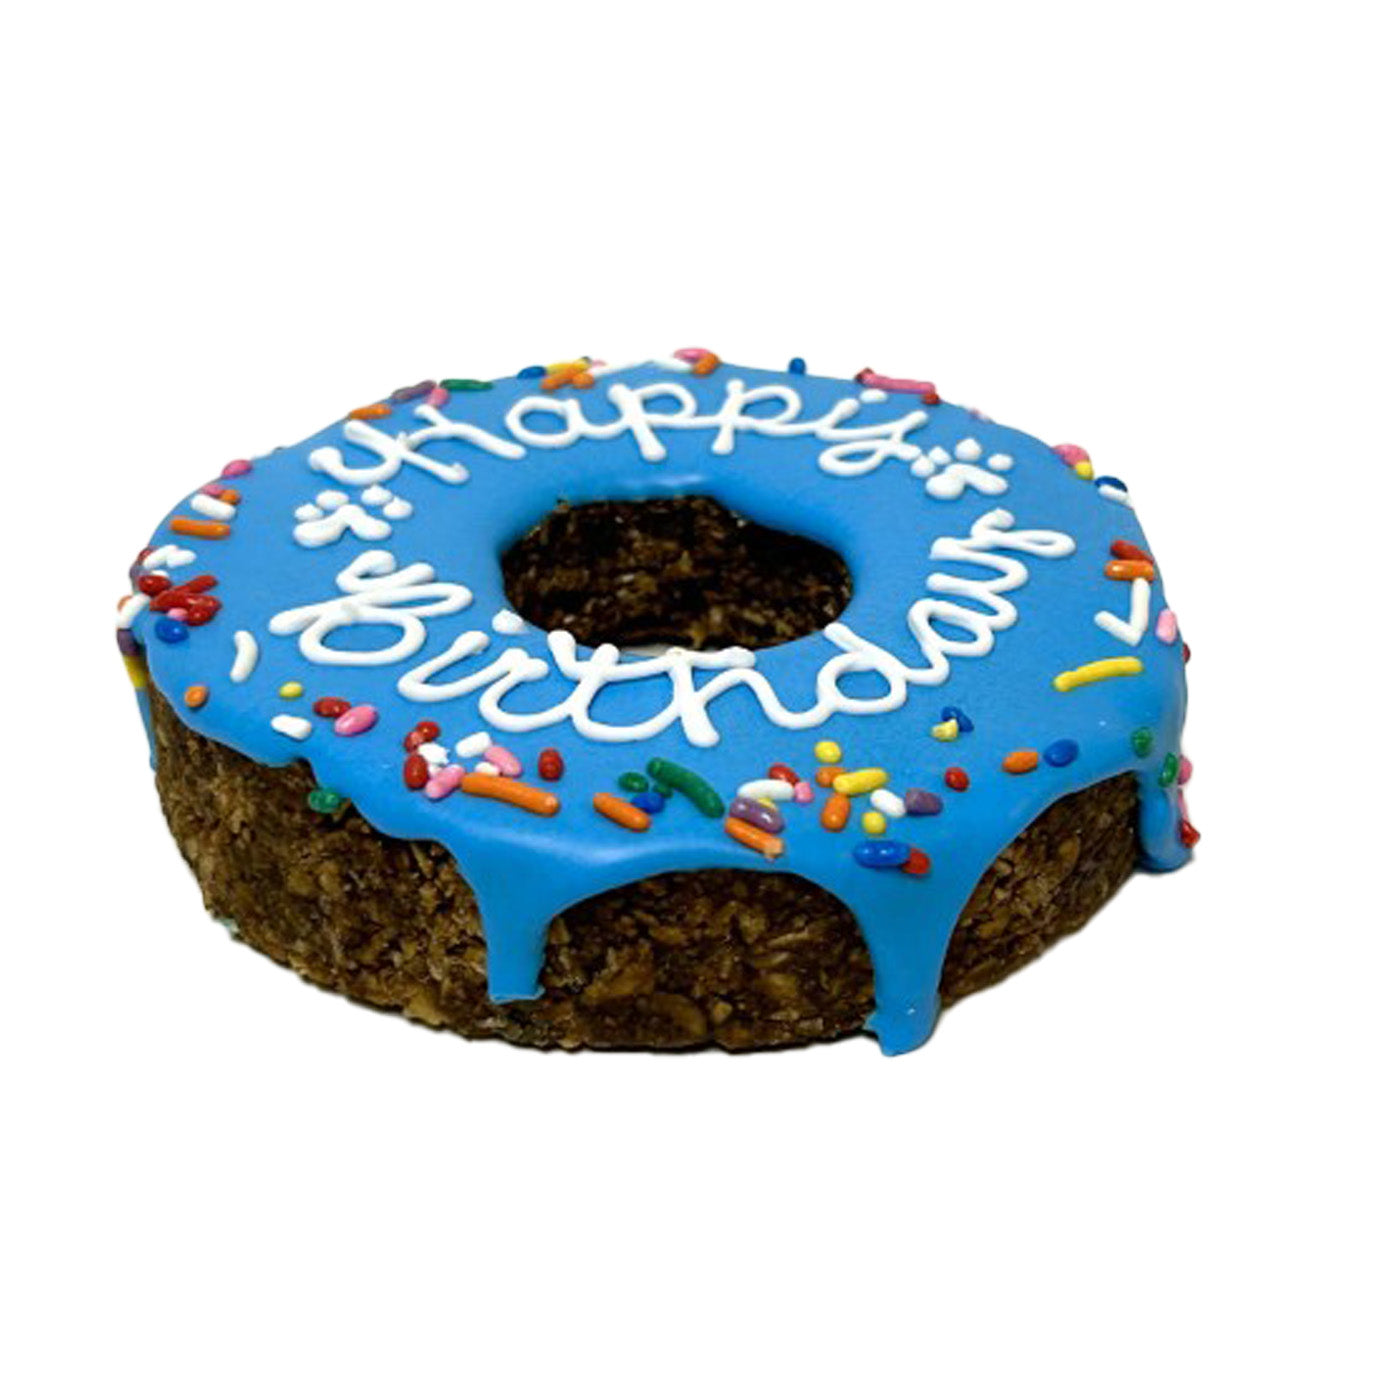 Blue Donut CAKE